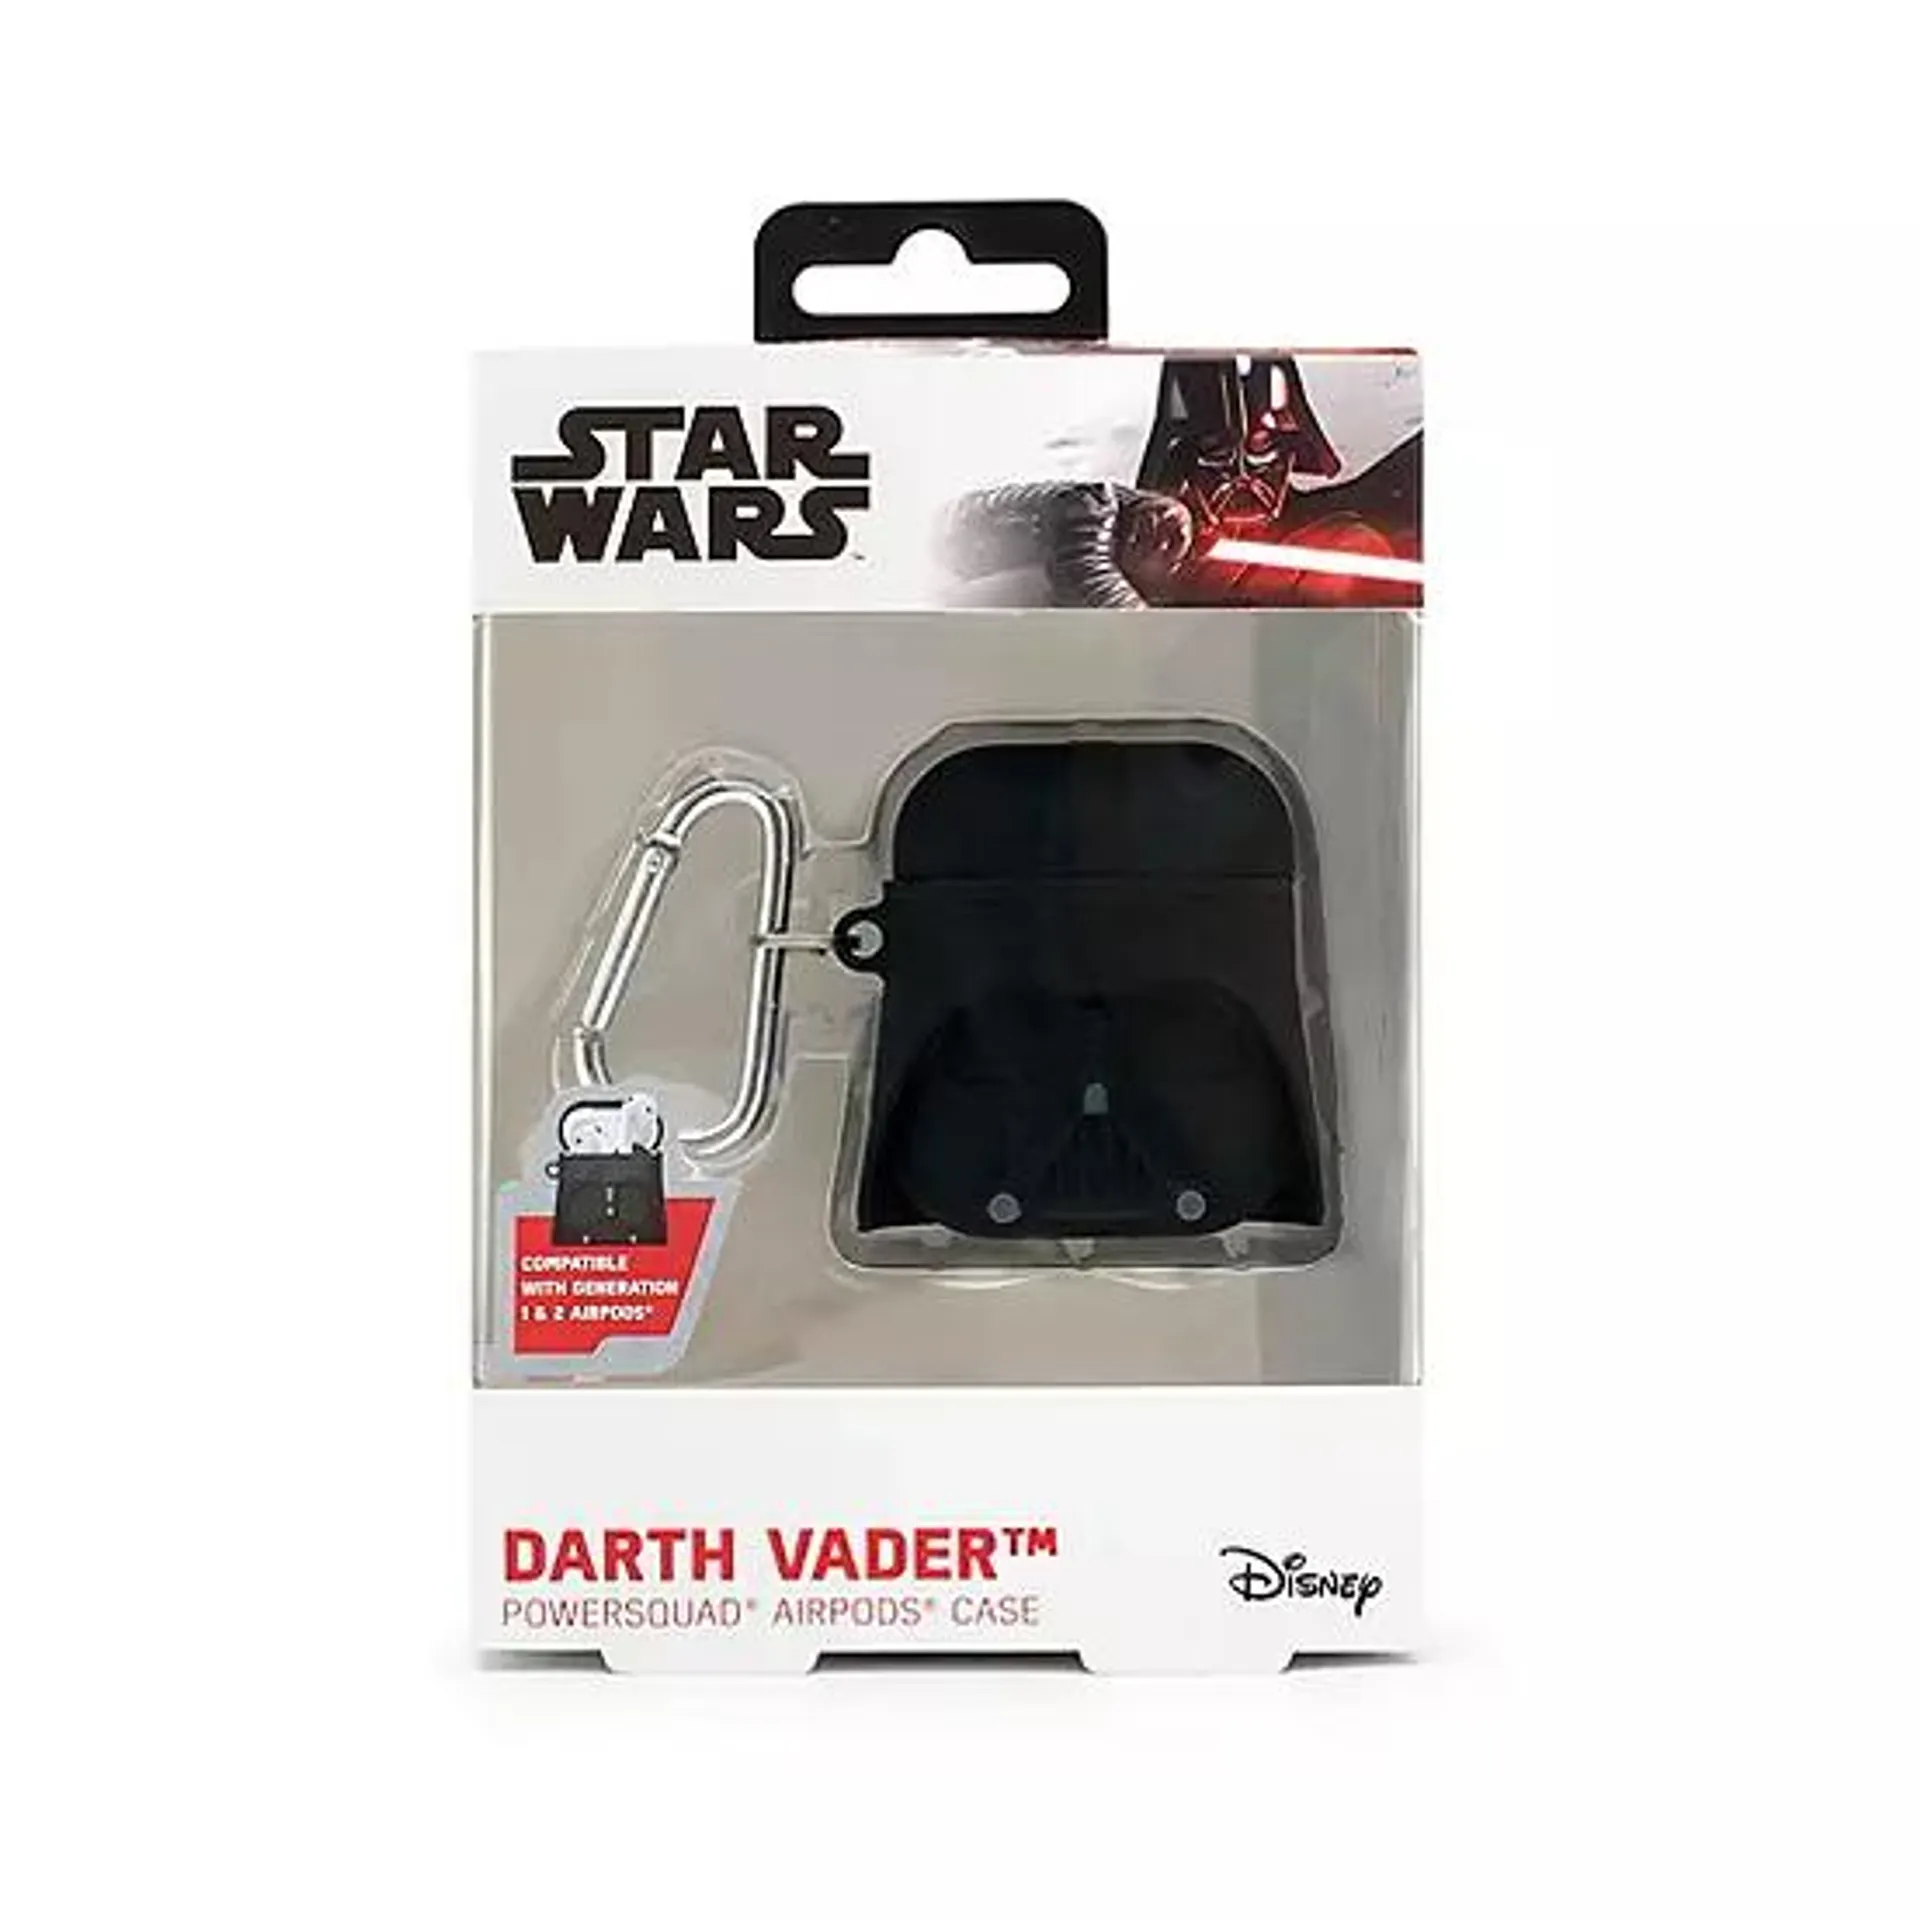 Star Wars Darth Vader AirPods Case